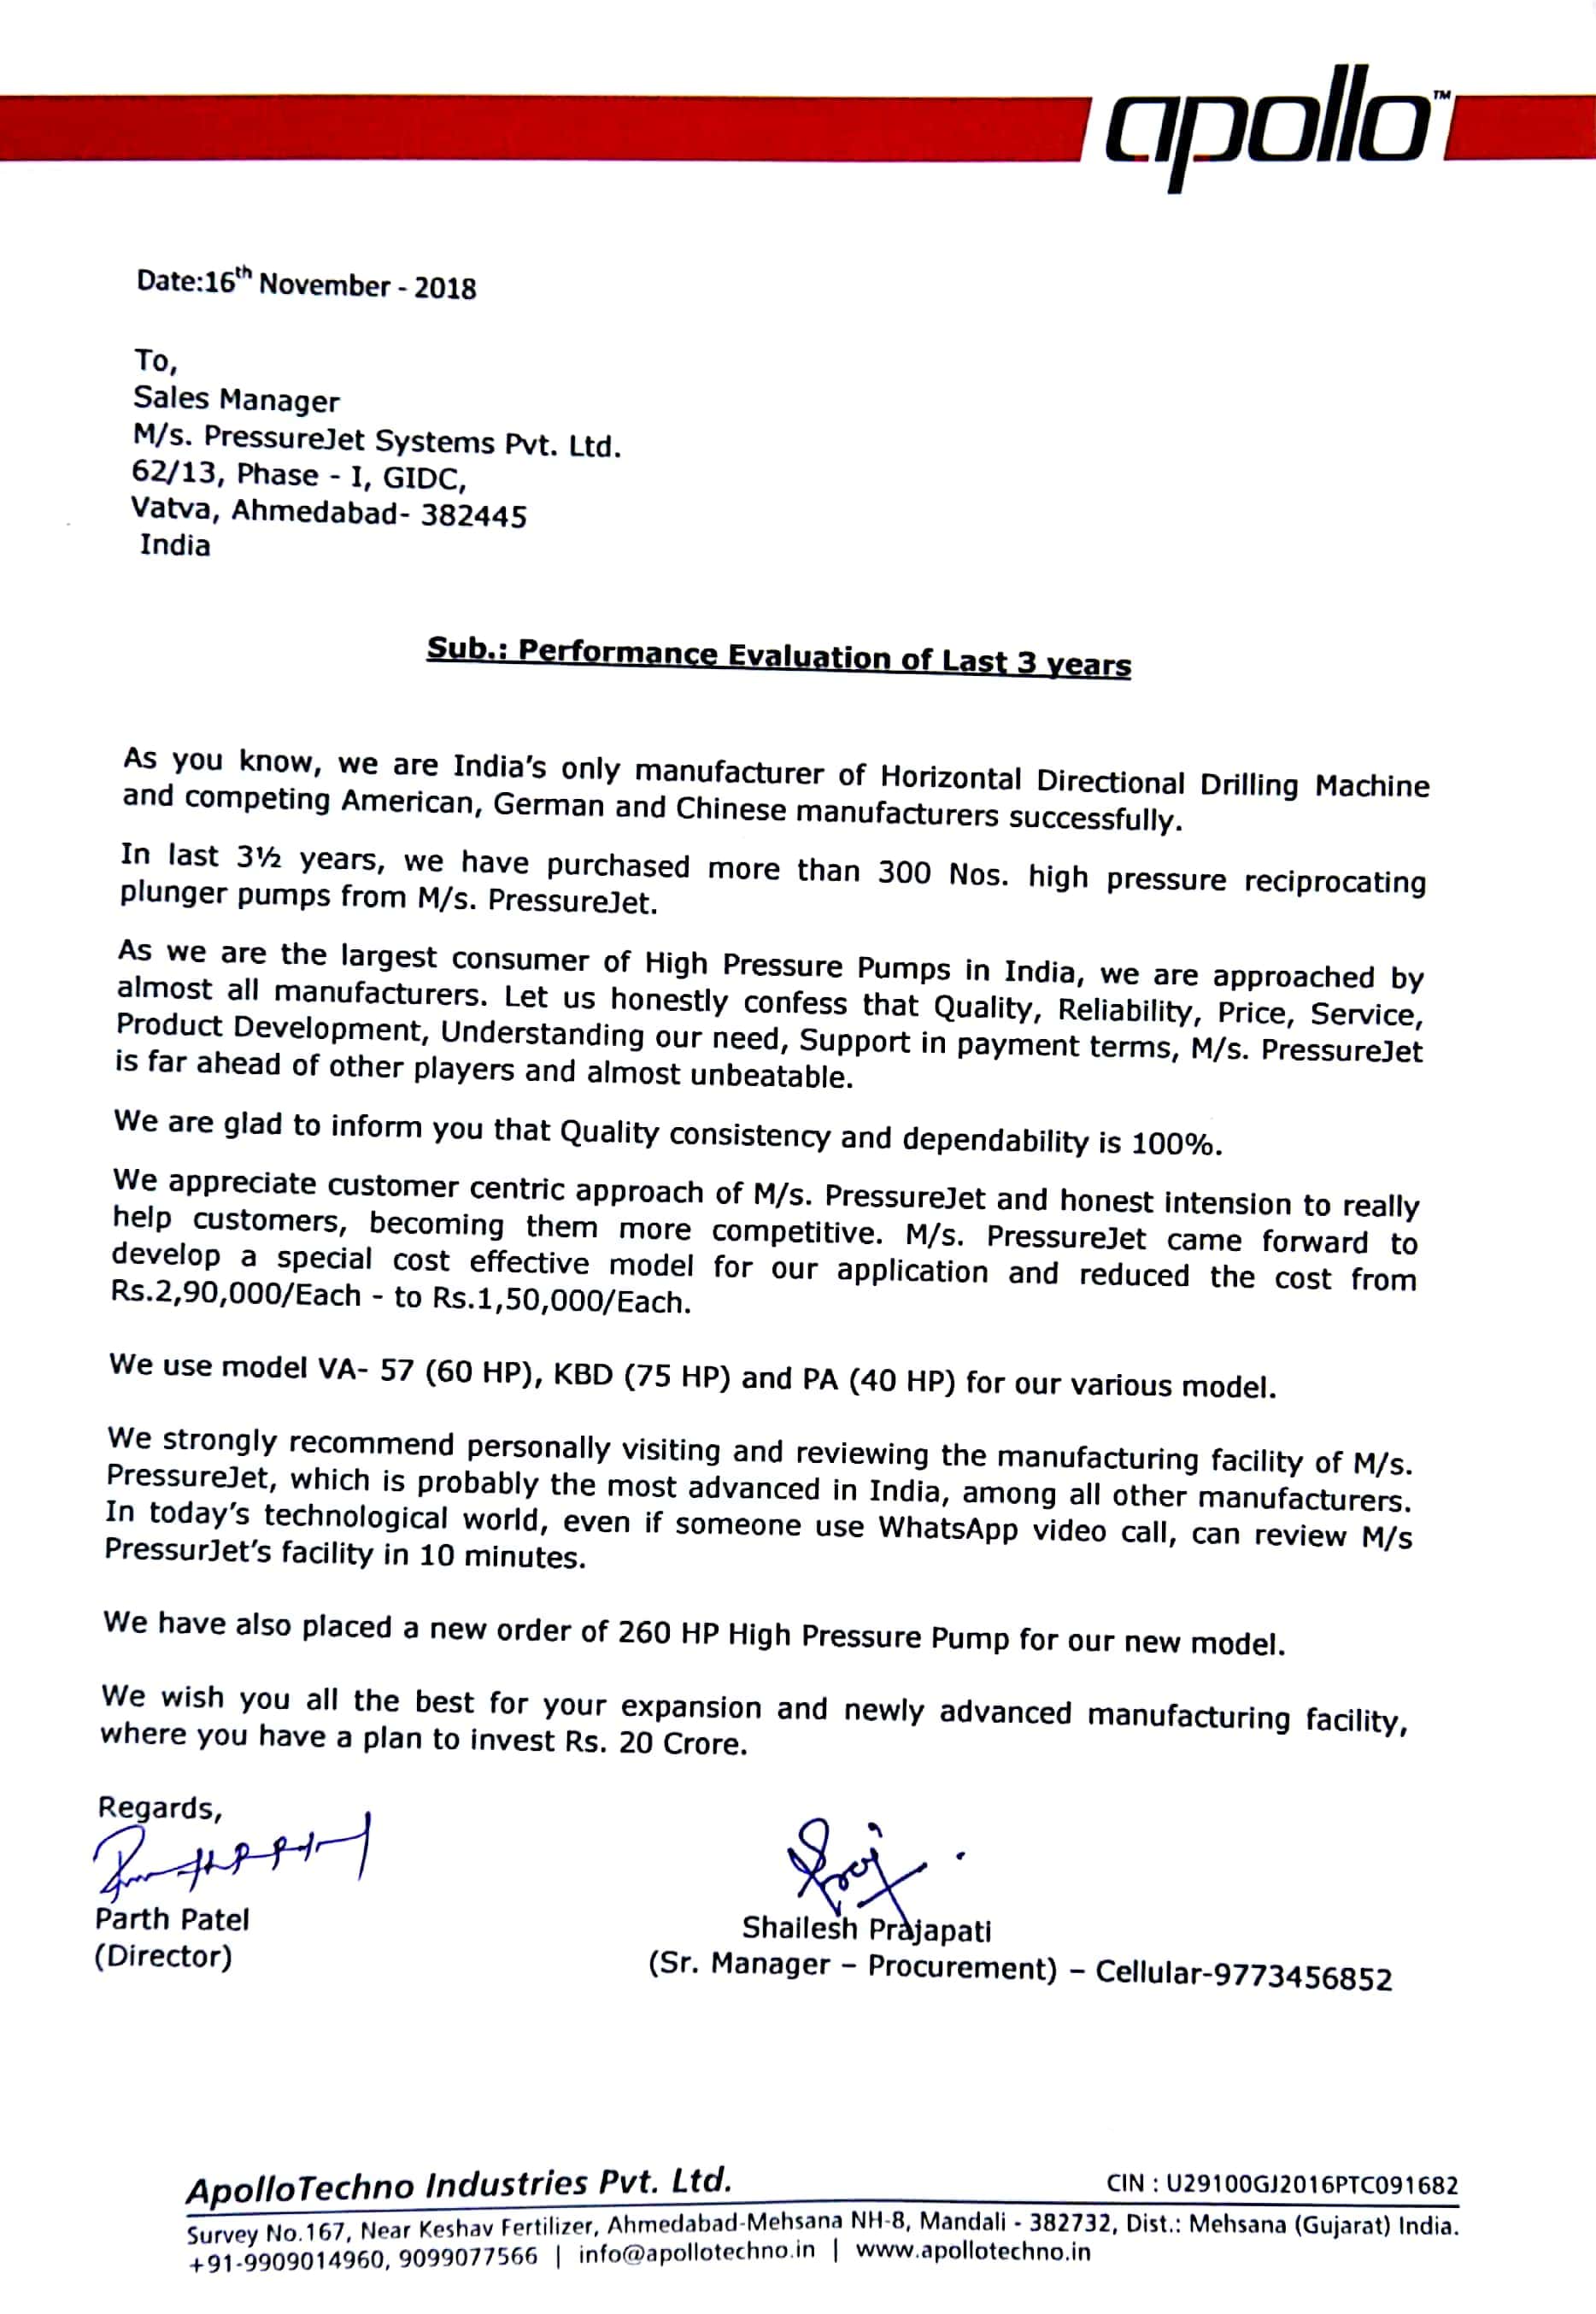  AppoloTechno Industries Pvt. Ltd. (Performance certificate)